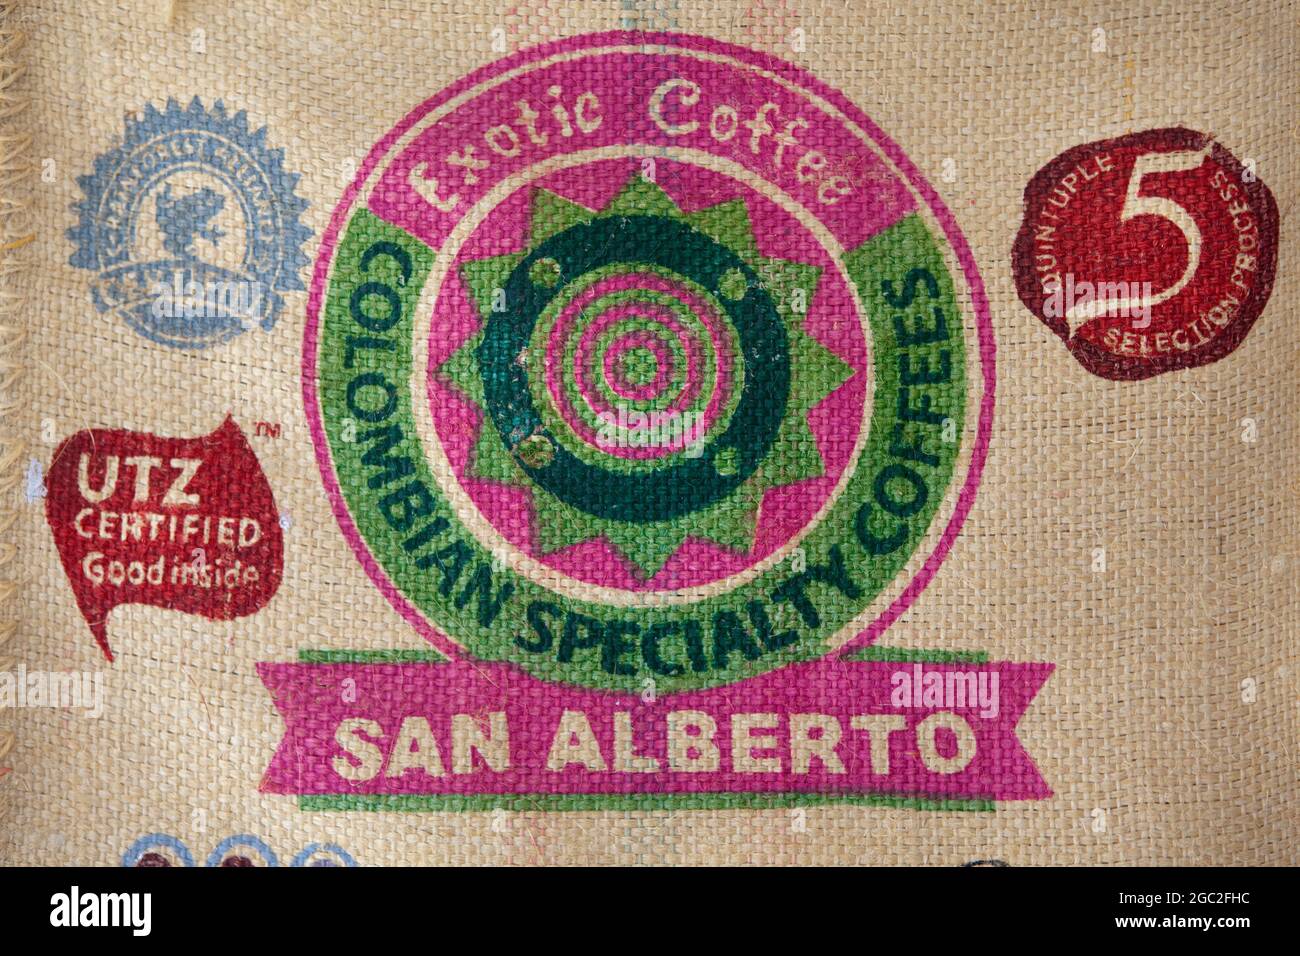 Coffee sack from Hacienda San Alberto, the most awarded single-estate coffee plantation in Colombia. Stock Photo